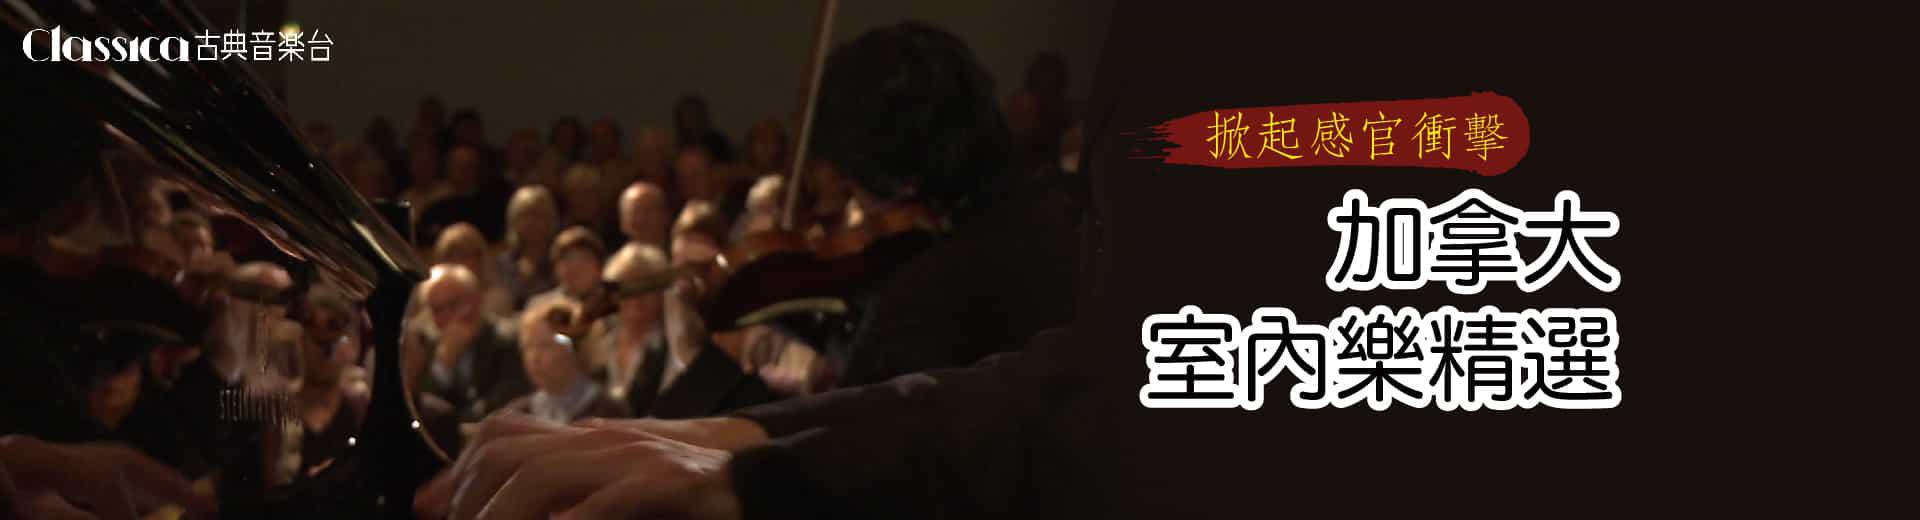 CLASSICA古典音樂台 2021年1月推薦節目